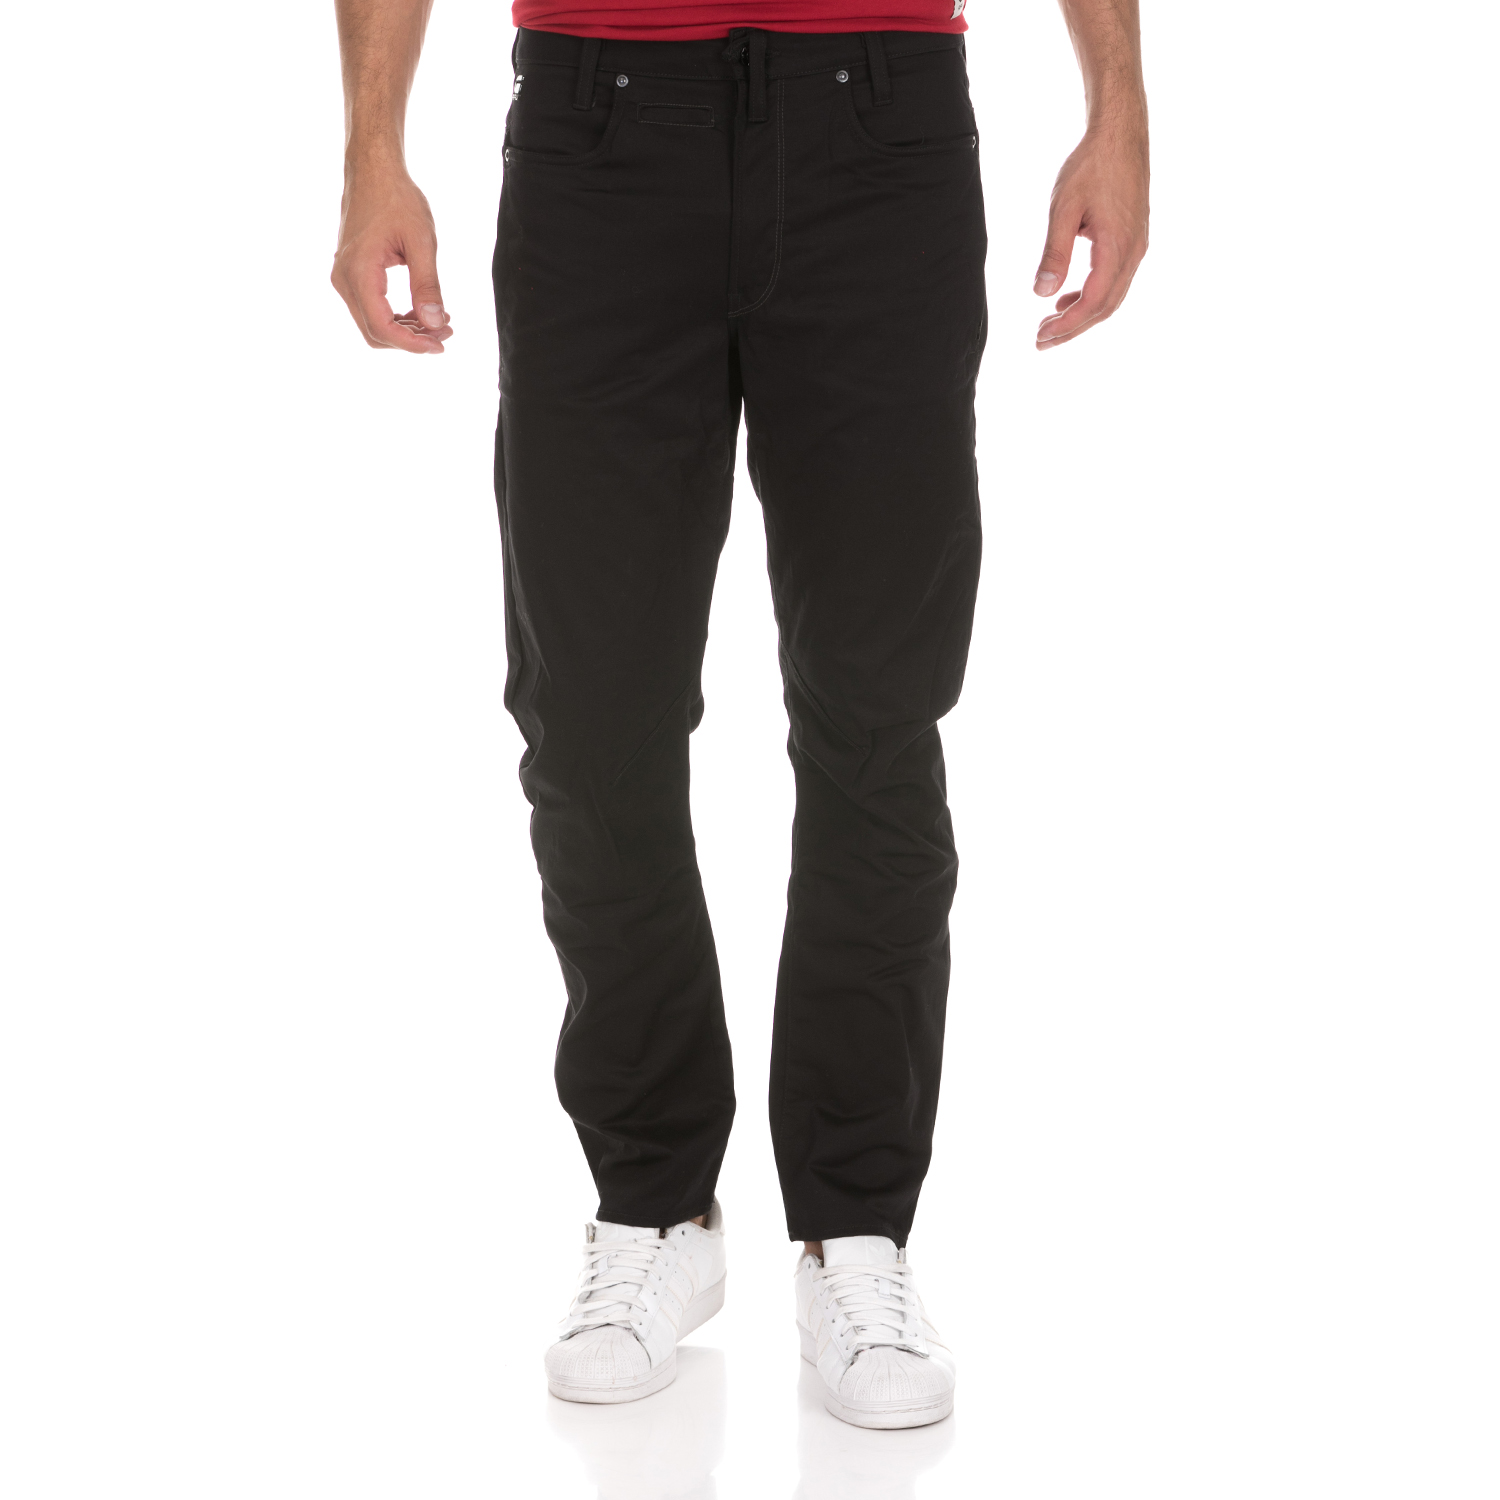 G-STAR RAW - Ανδρικό παντελόνι G-STAR RAW D-Staq 3D Tapered μαύρο Ανδρικά/Ρούχα/Παντελόνια/Φαρδιά Γραμμή